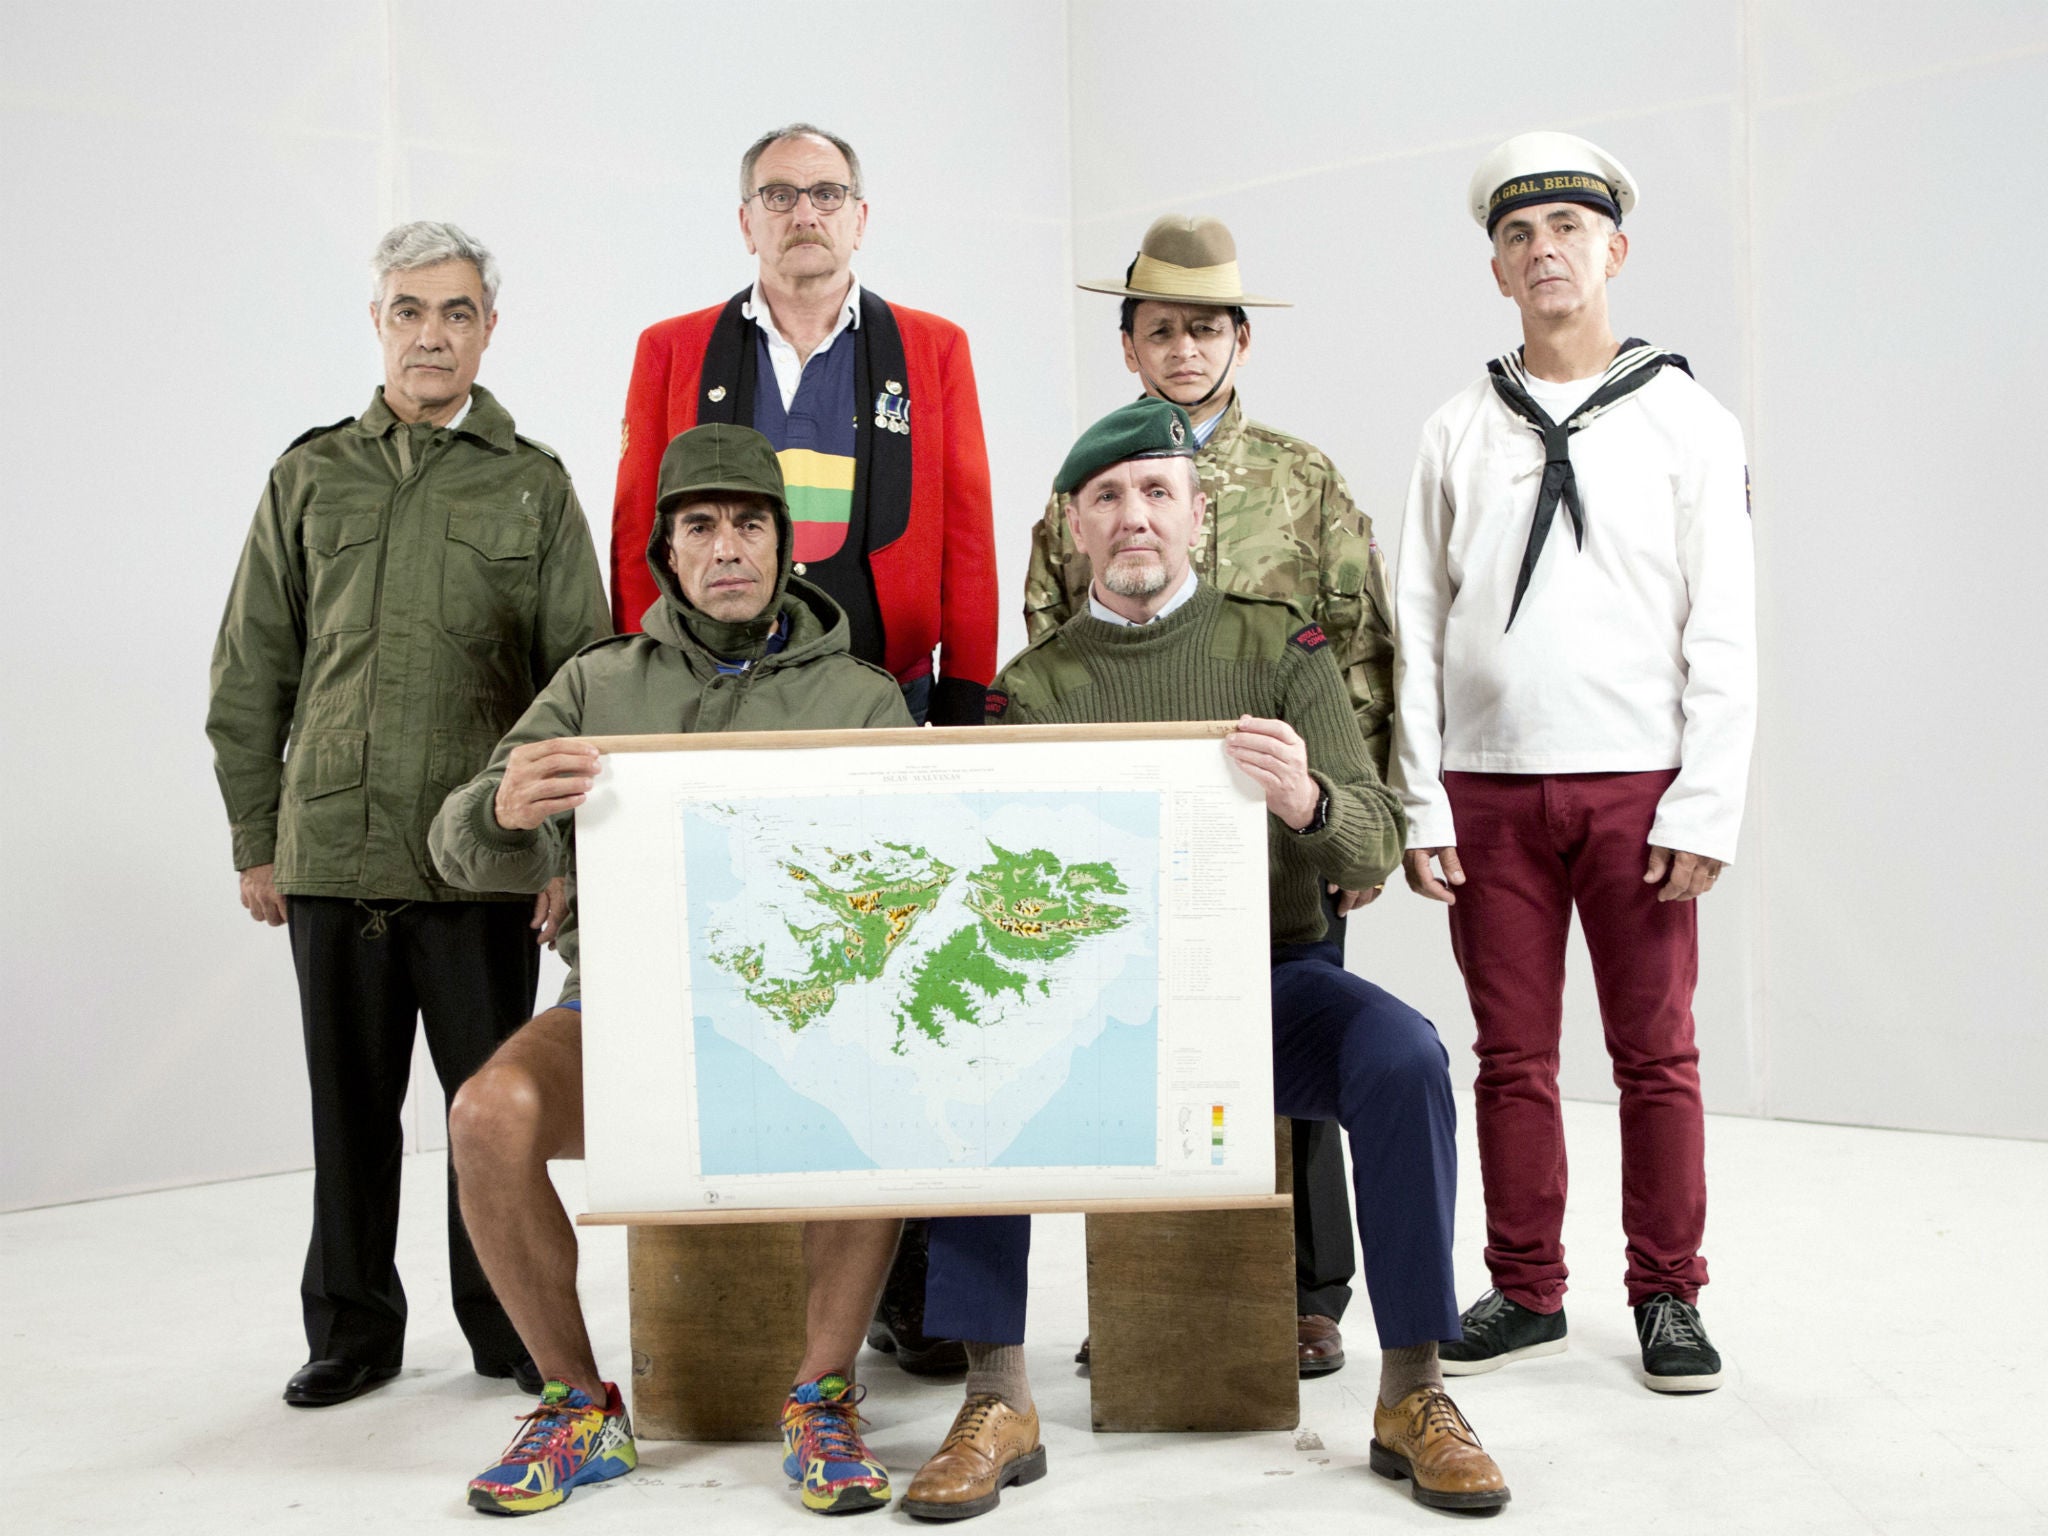 (Standing L-R) Gabriel Sagastume, David Jackson, Sukrim Rai, Rubén Otero (Sitting L-R) Marcelo Vallejo, Lou Armour with map of the Falklands/Malvinas